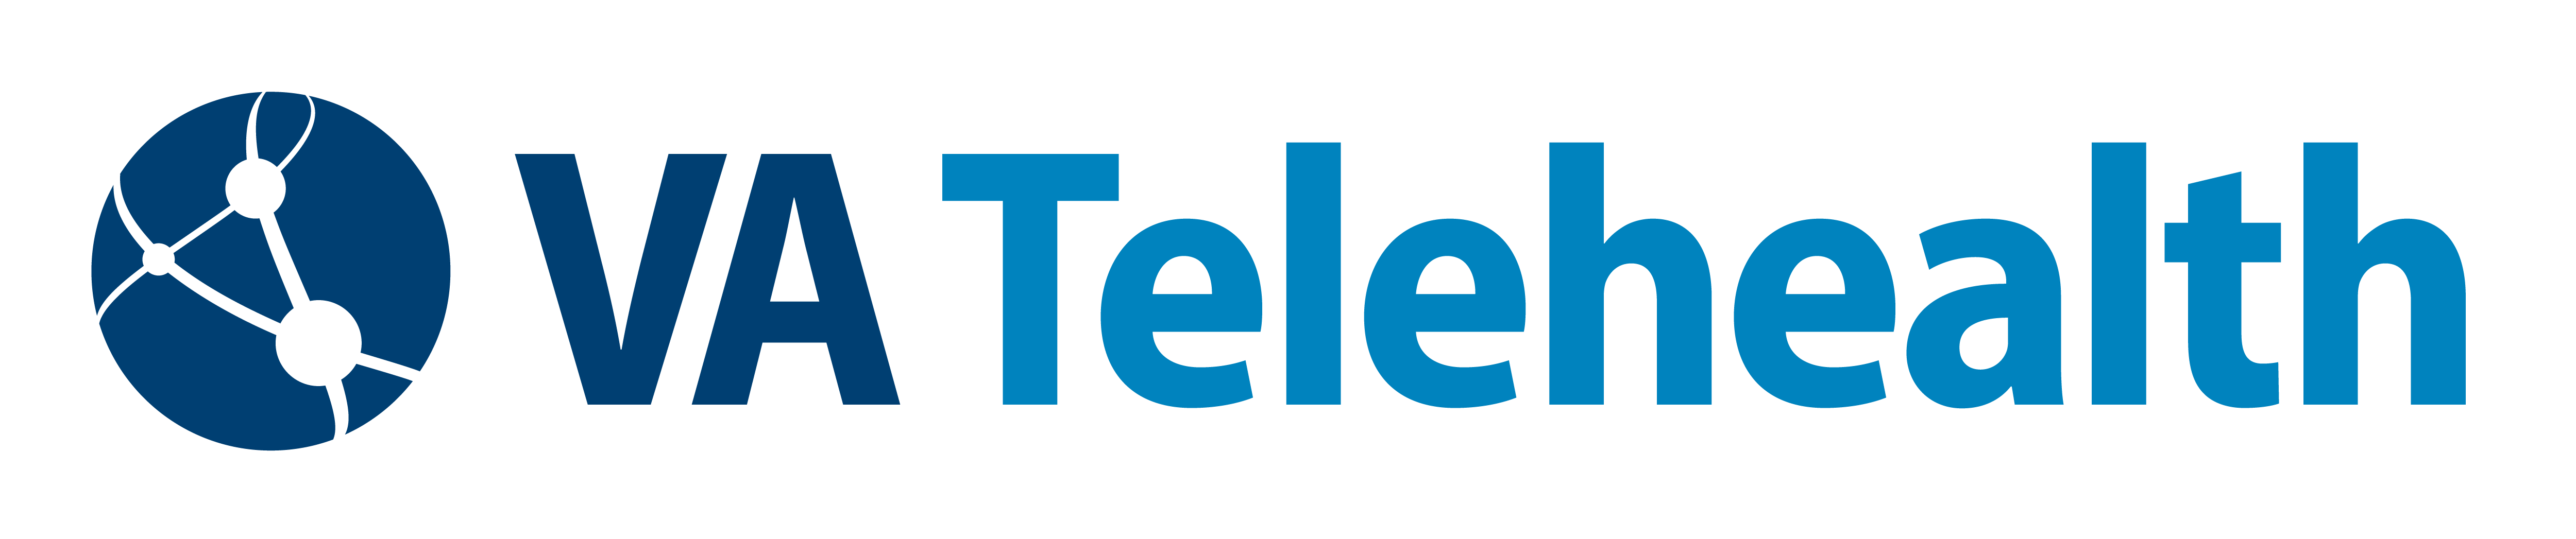 VA Telehealth Logo